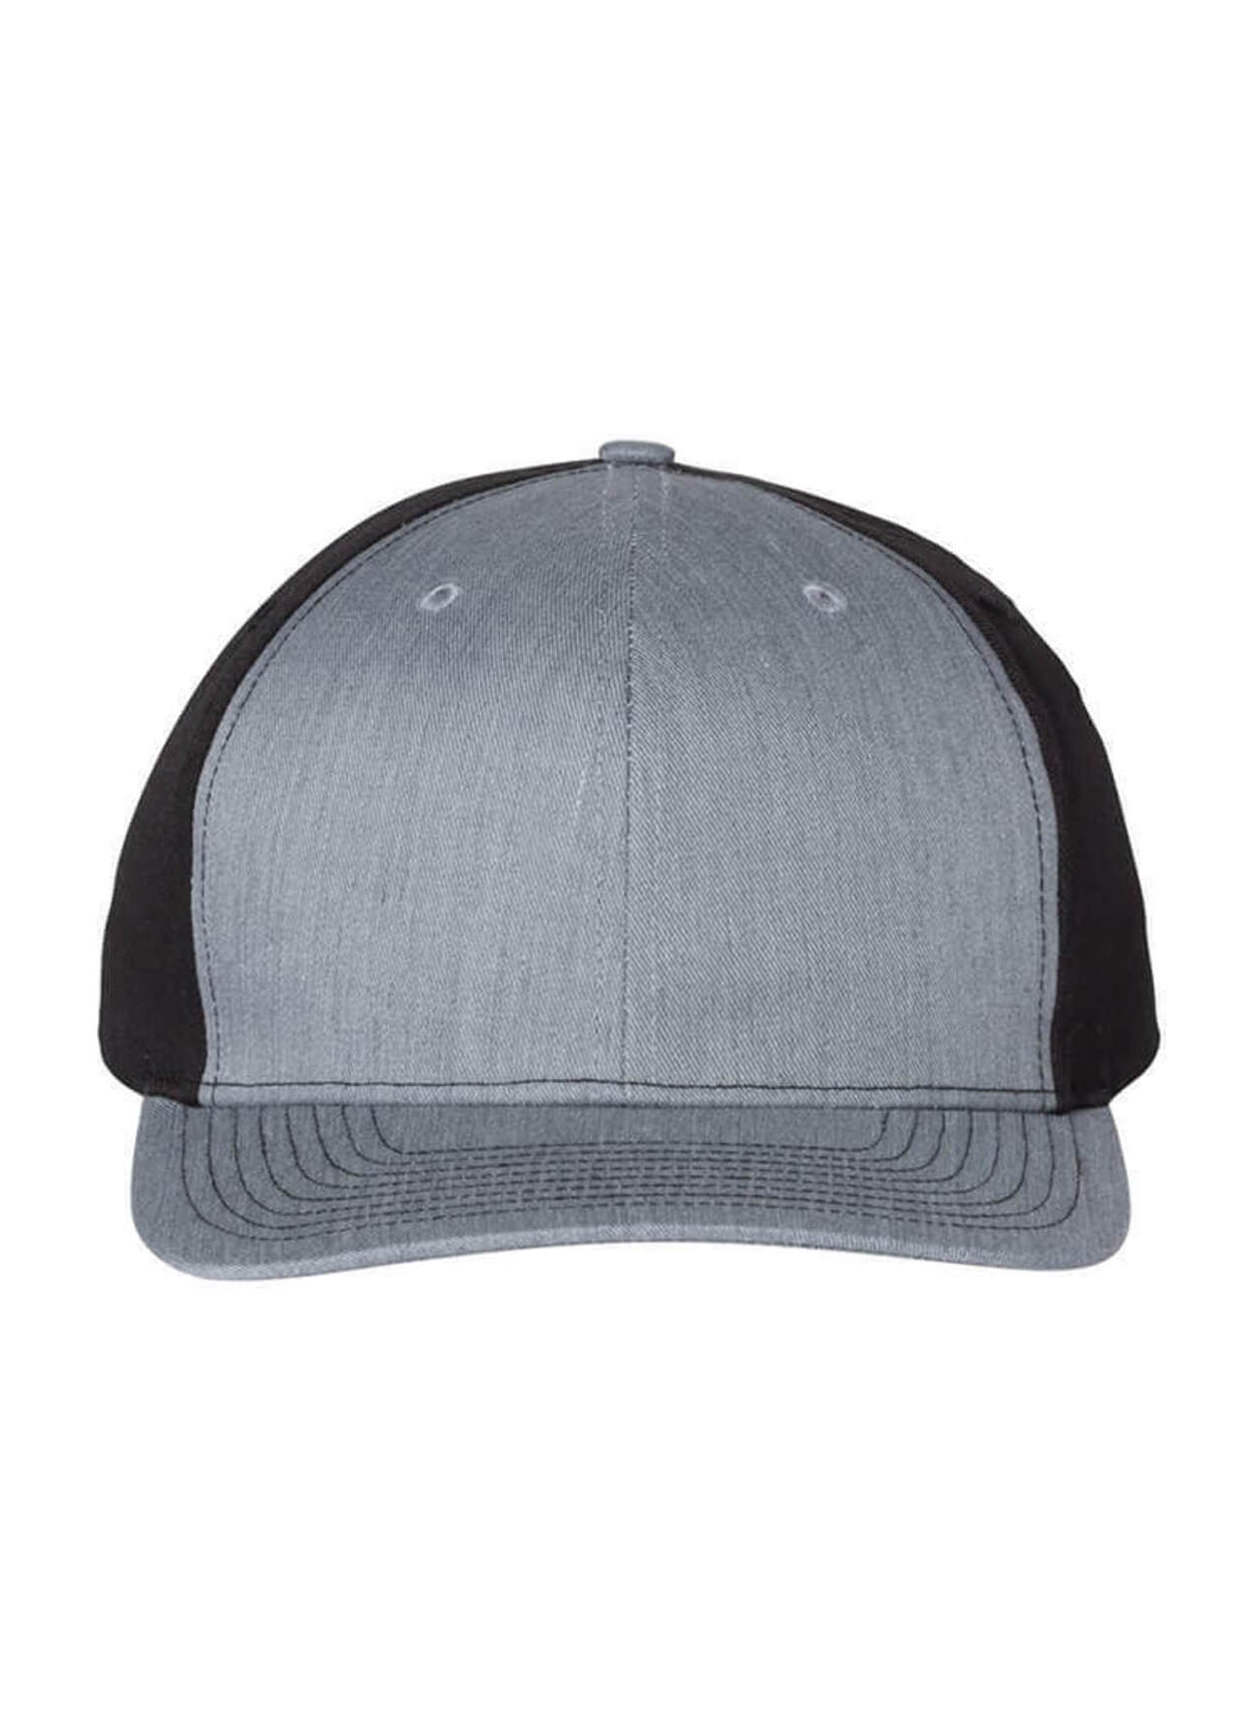 Trucker Hat Black/Black-GRAY SIDE LOGO- Item #43195 – Mouth Hug